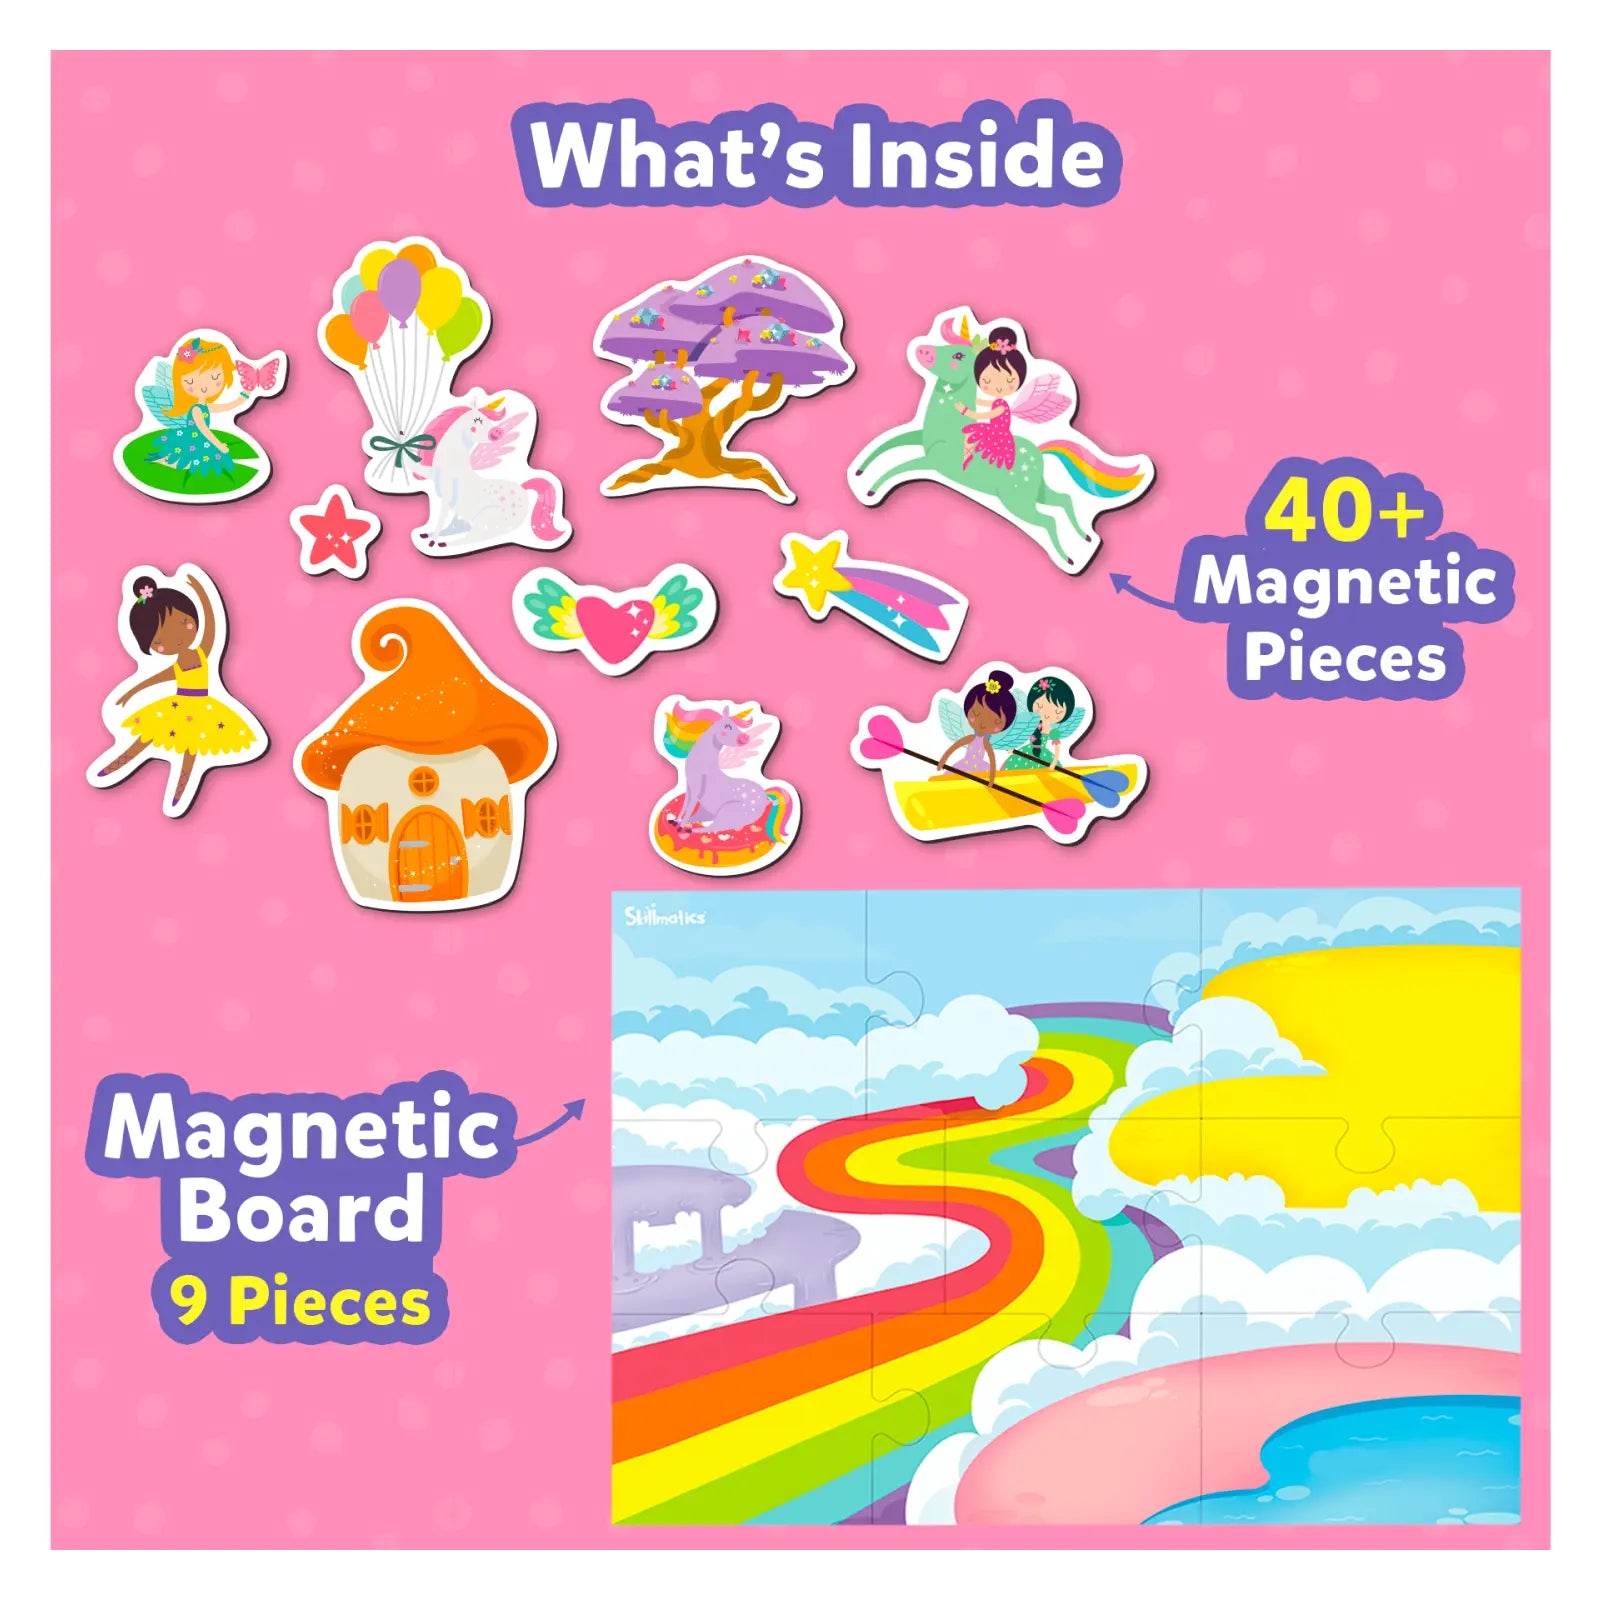 Magnetopia - Princess & Unicorn Land! | Interactive Pretend Play Set (ages 3-7)